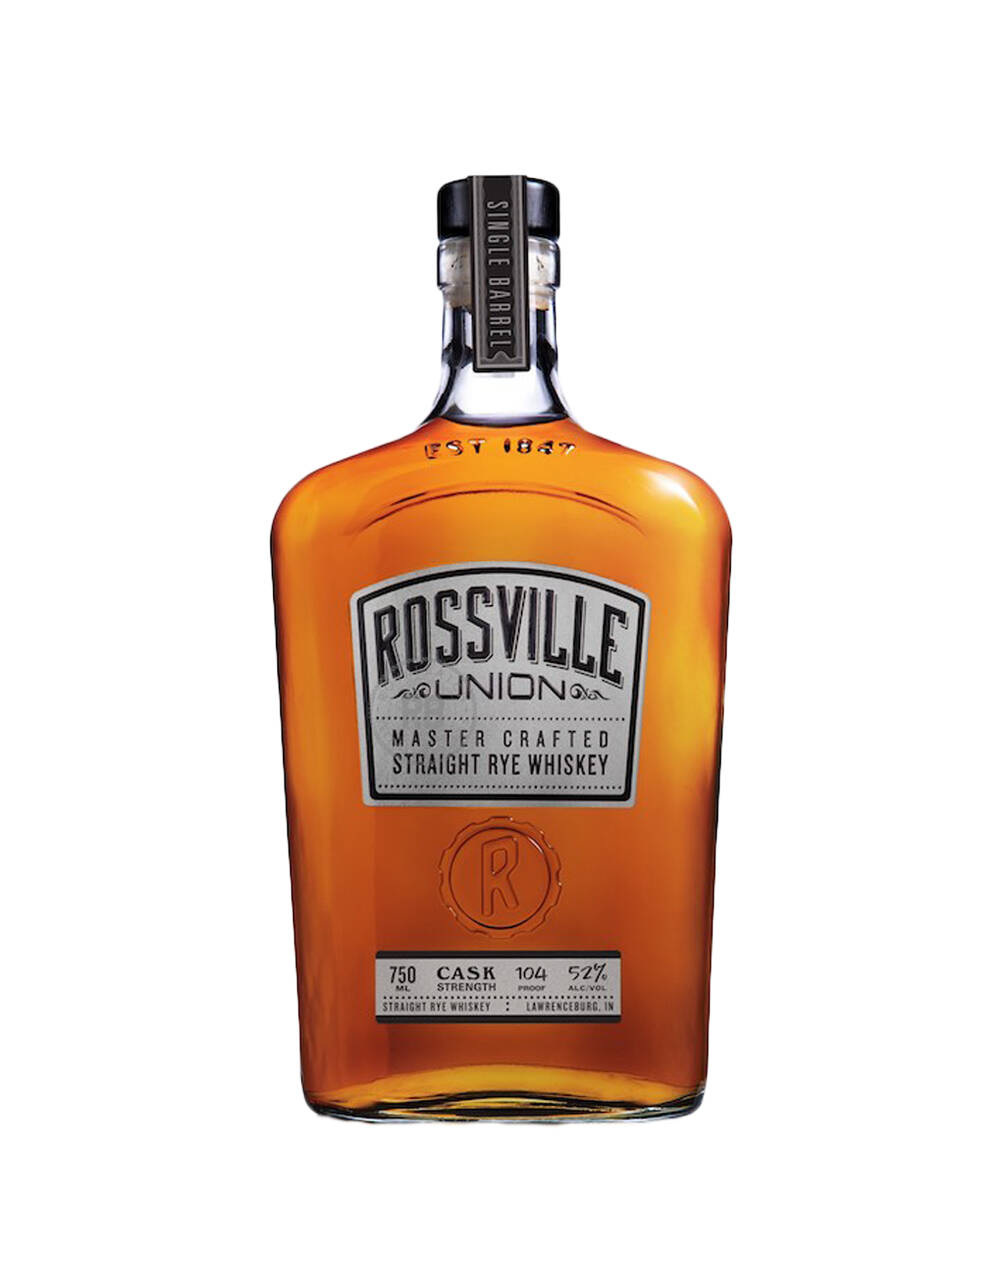 Rossville Union Cask Strength Straight Rye Whiskey